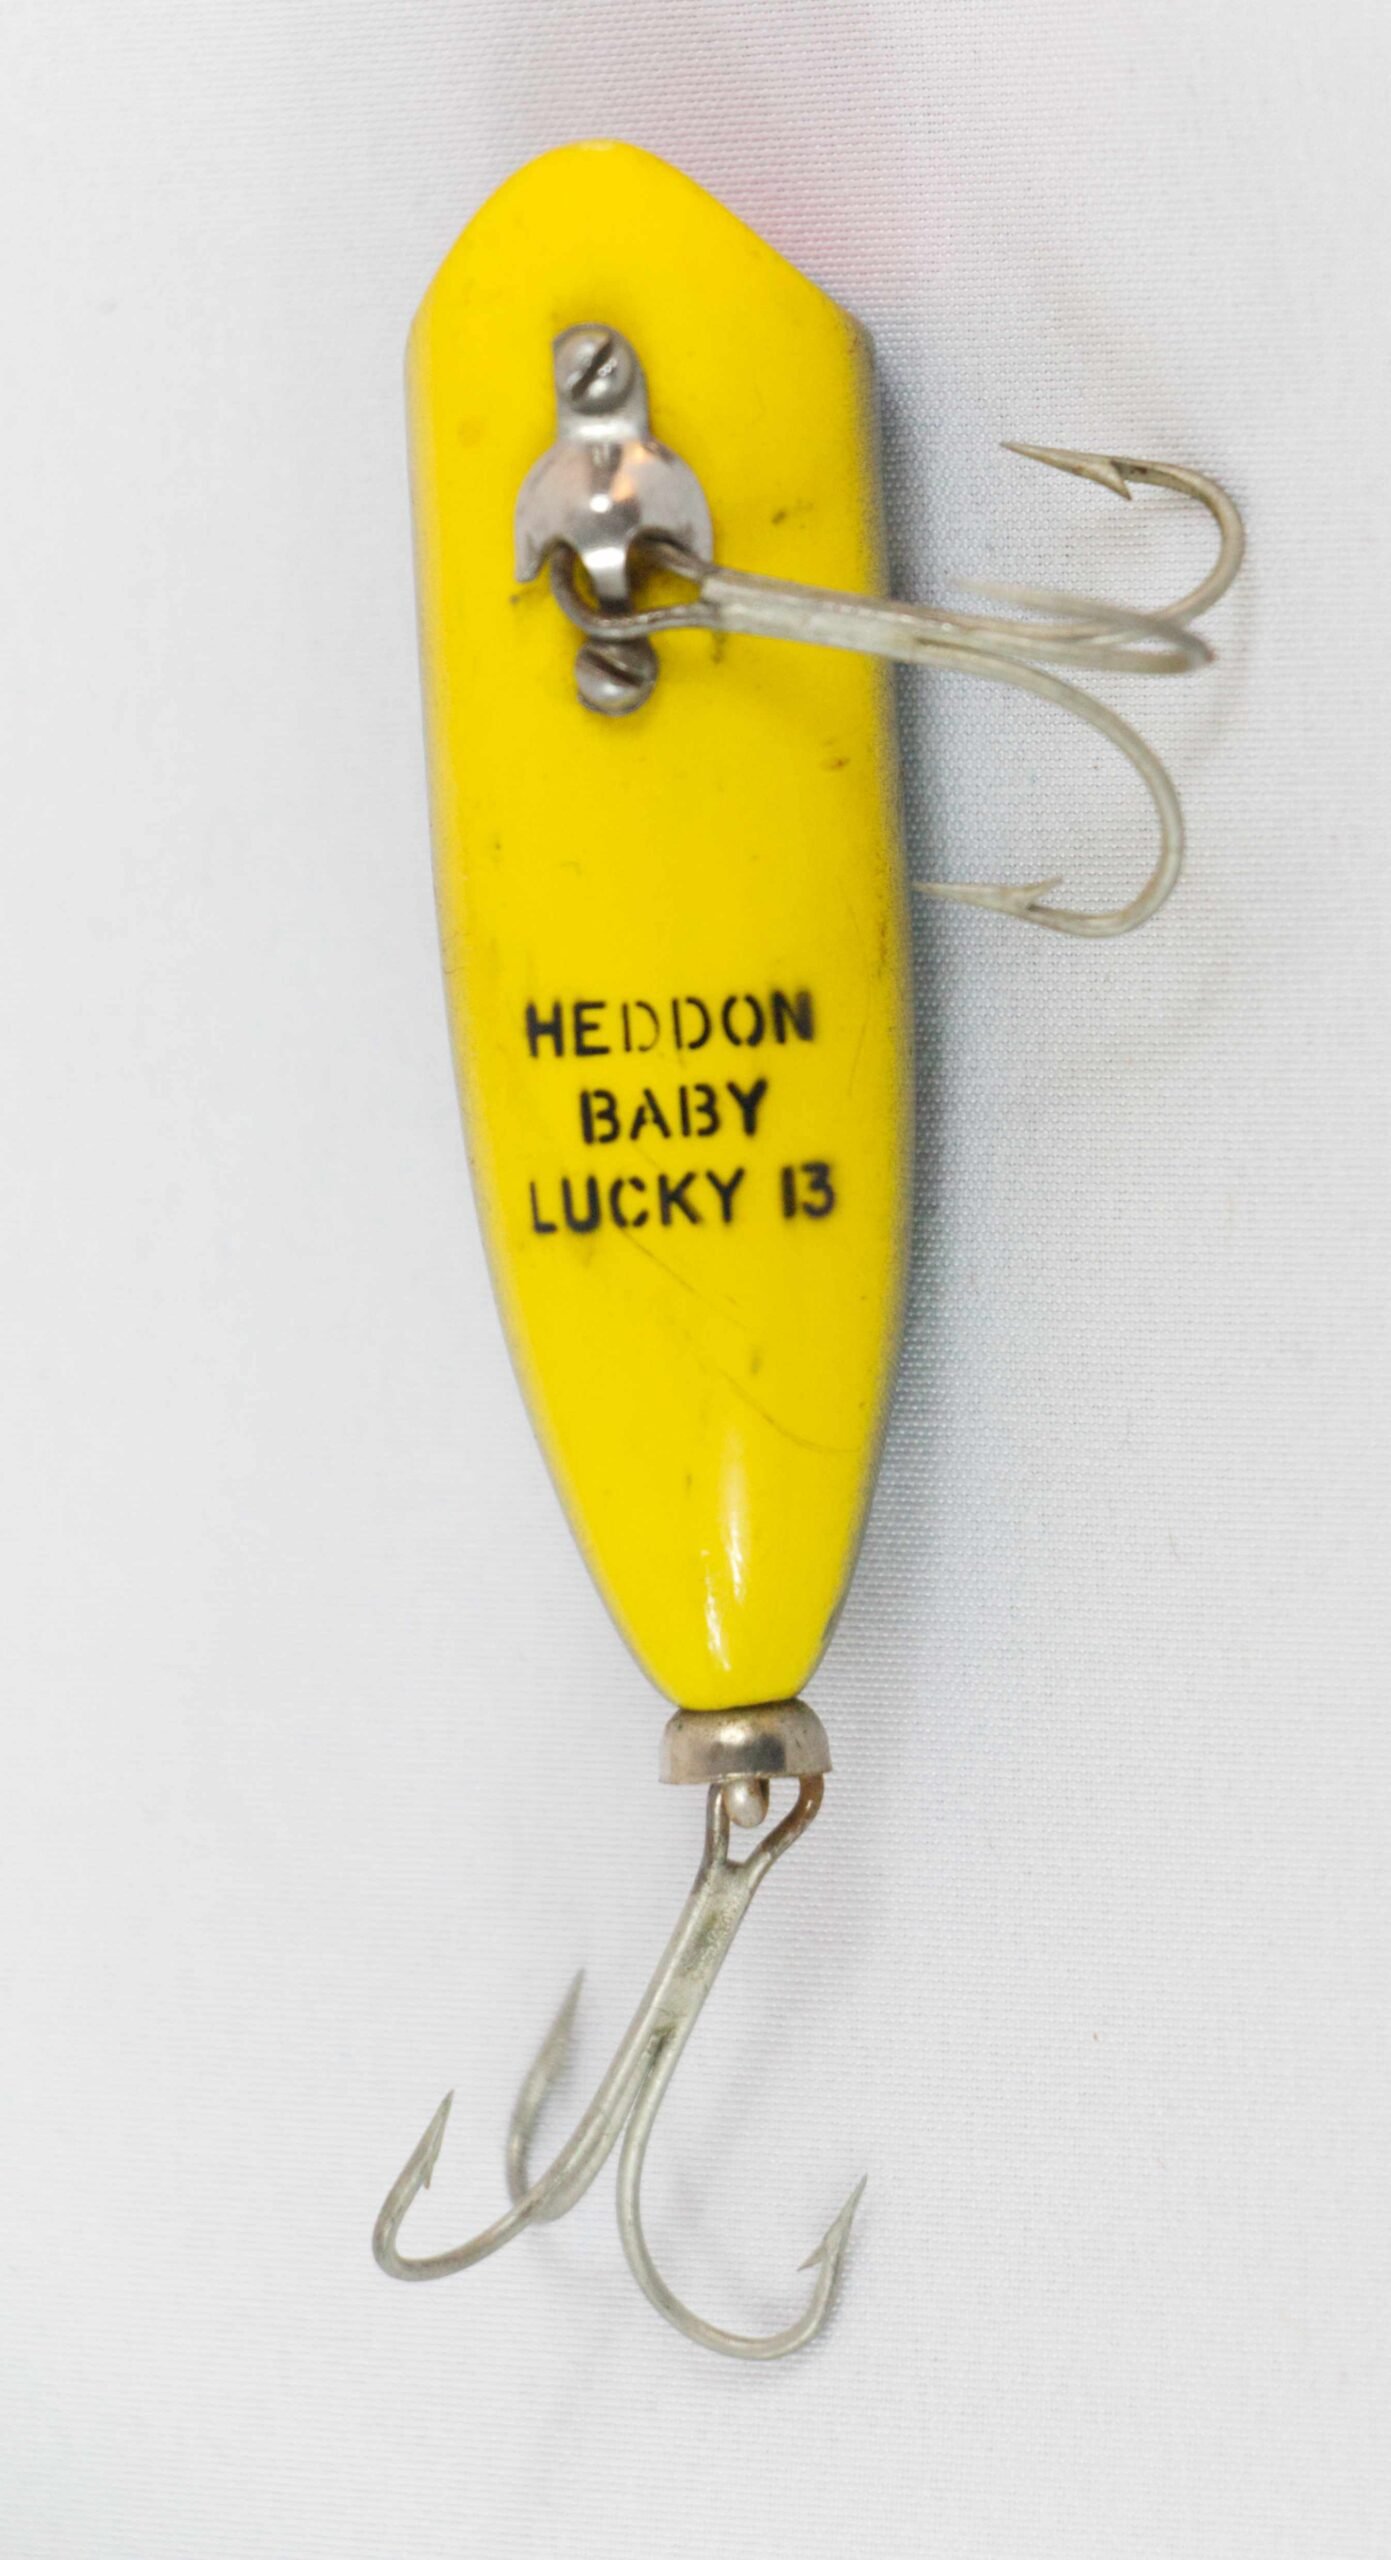 1 Heddon Baby Lucky 13 And 1 Crabwiggler Fishing Lure